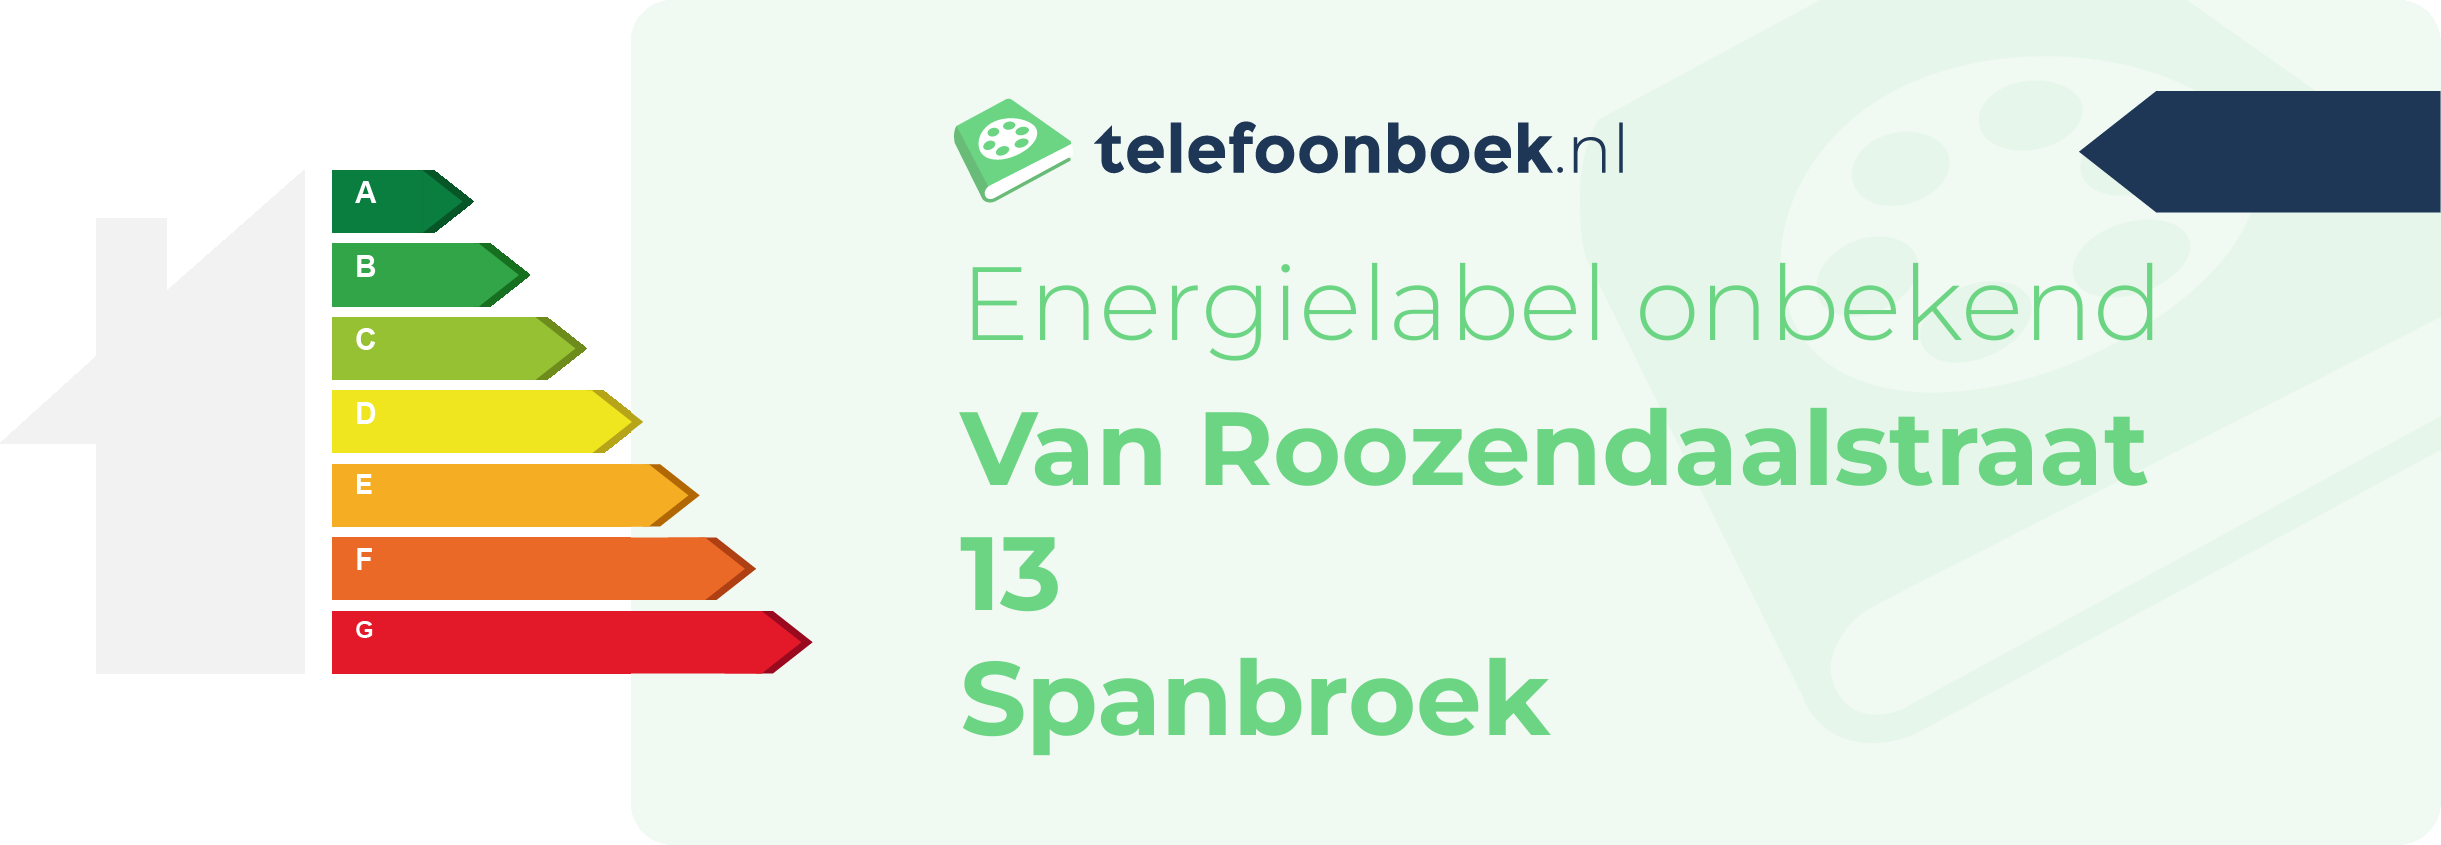 Energielabel Van Roozendaalstraat 13 Spanbroek